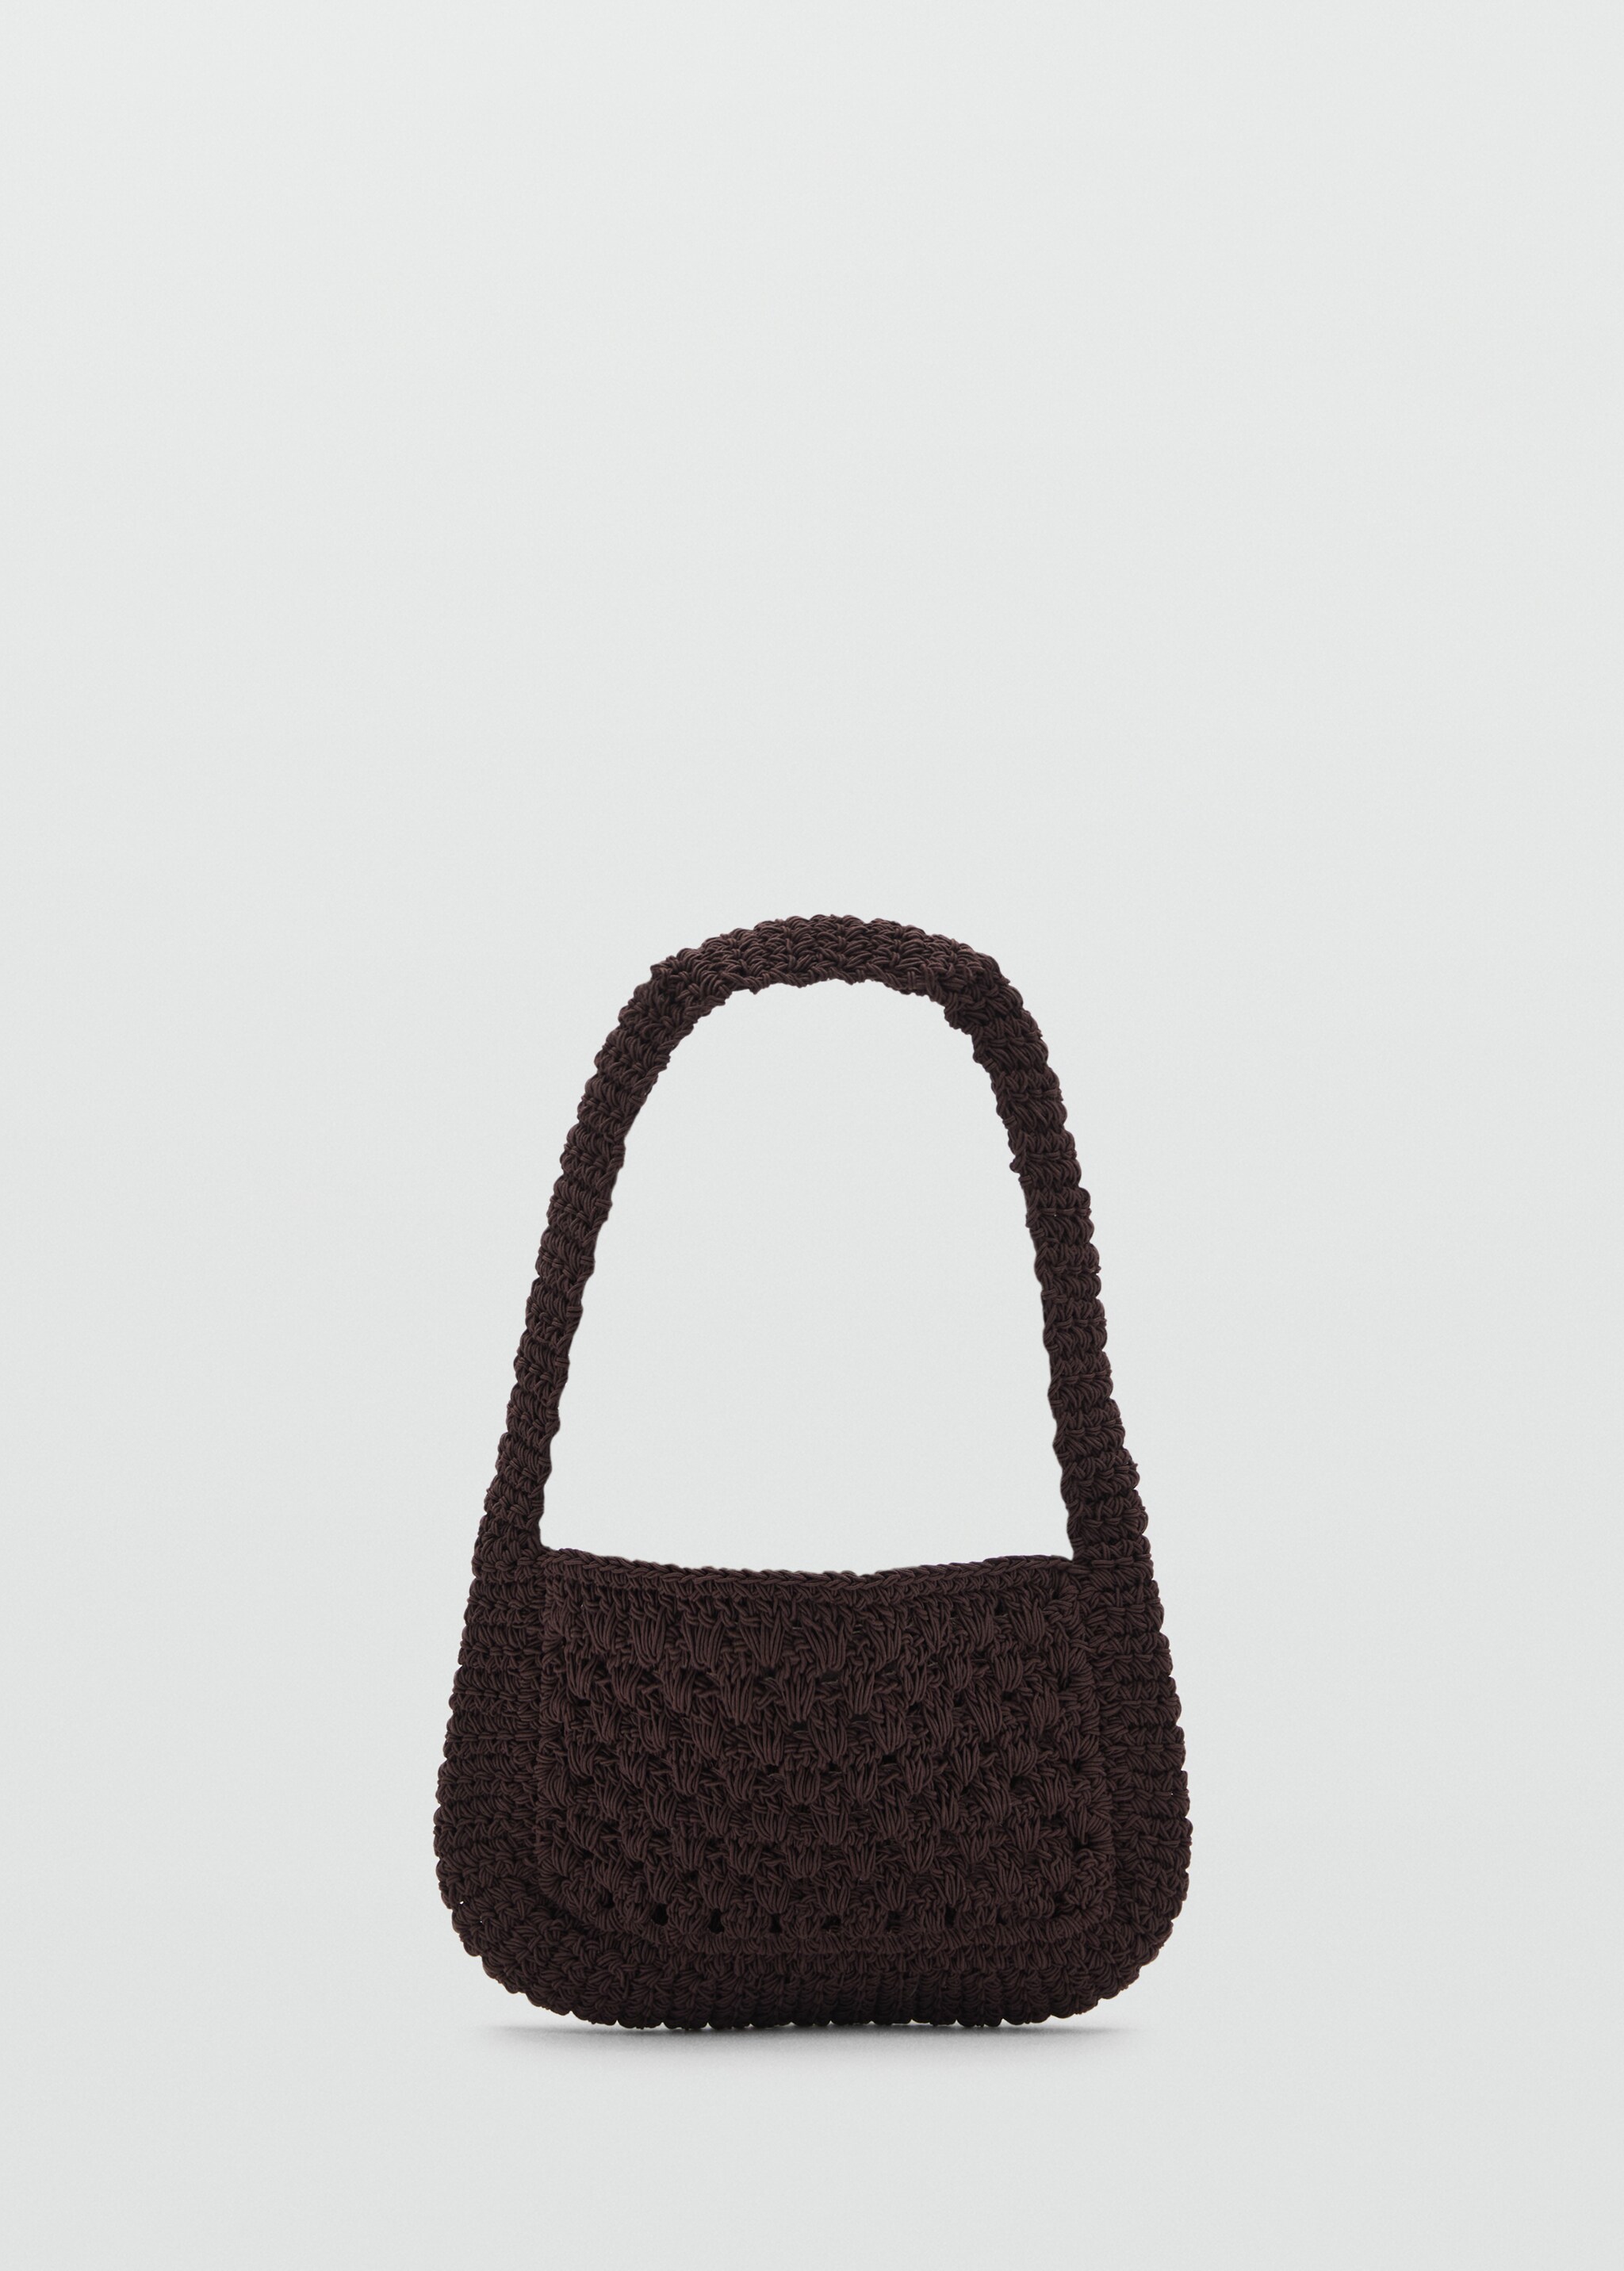 Crochet handbag - Article without model